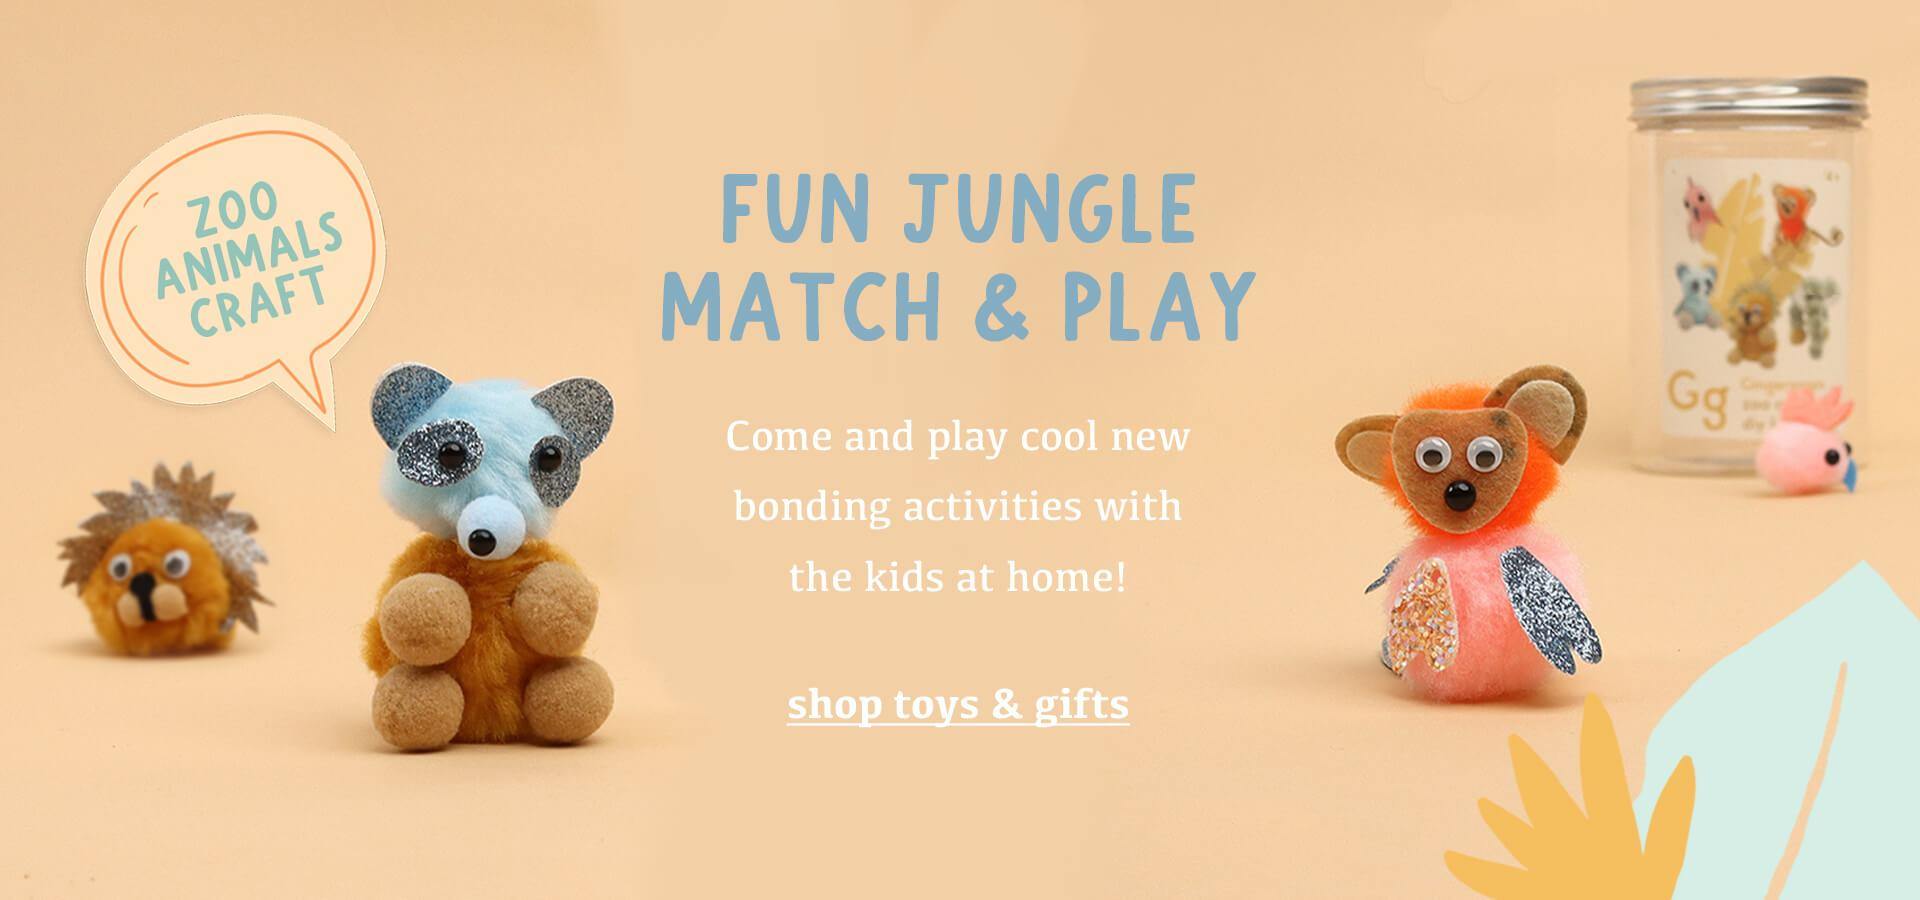 Zoo Animals Craft<br>Fun Jungle Match & Play